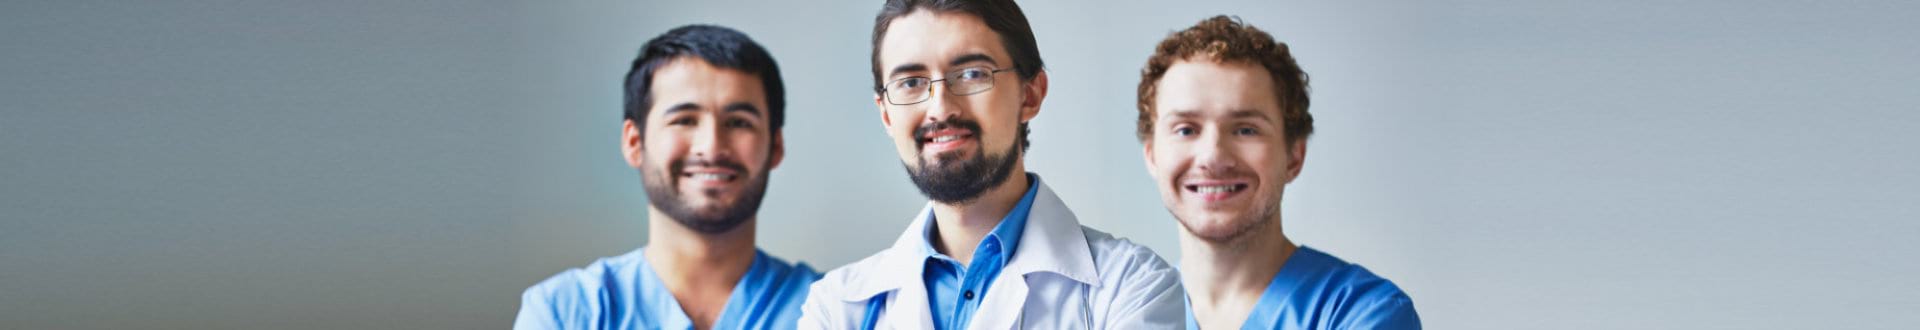 portrait of male doctors